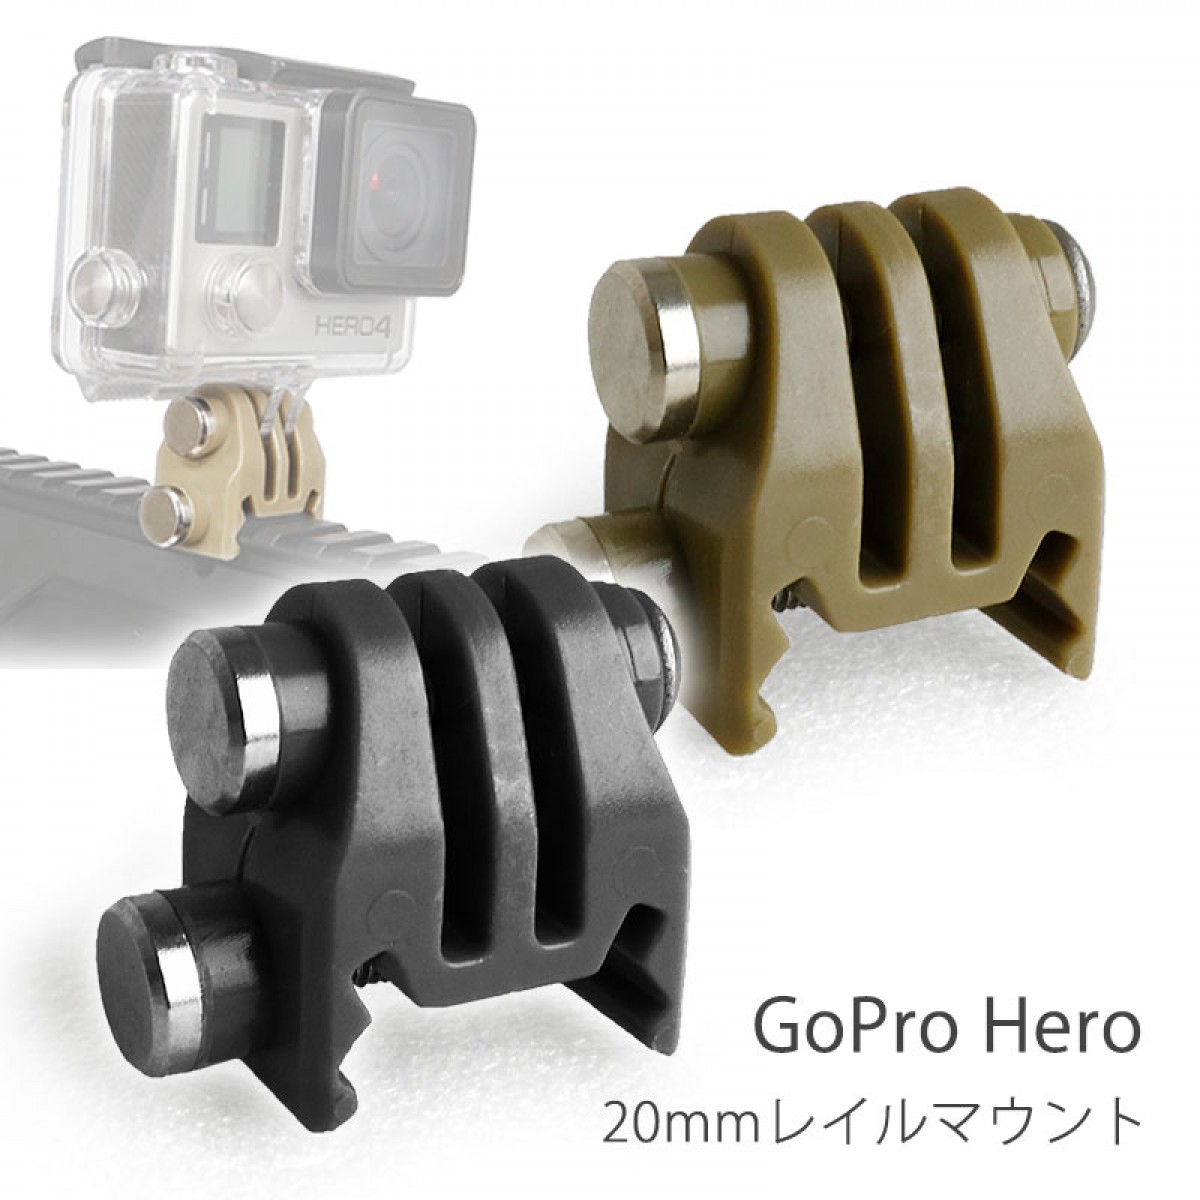 GoPro Hero対応 20mmレール 接続マウント (BK/TAN) ホルダーアダプター ウェアラブルカメラ用アクセサリ